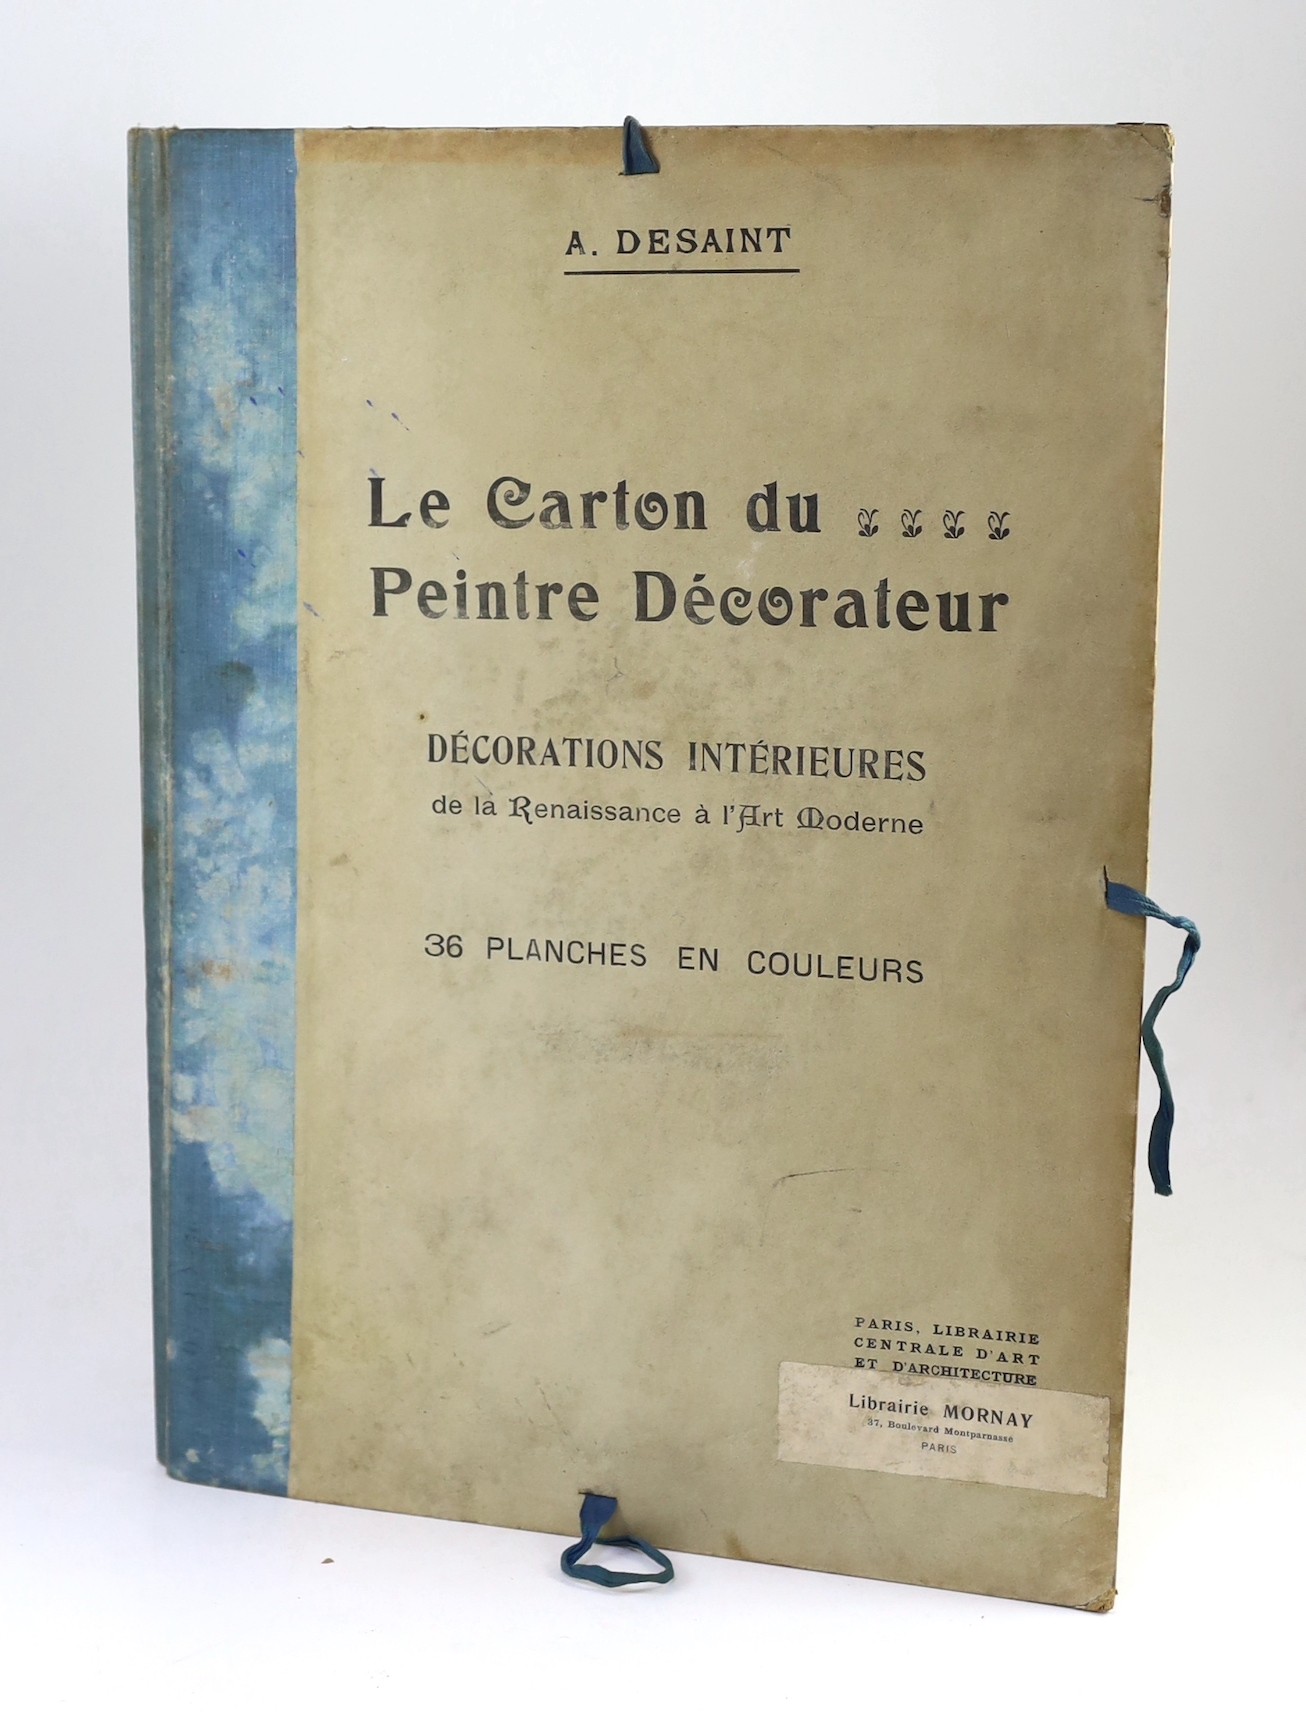 Desaint, A - La Carton du Peinture Decorateur, folio, quarter cloth with printed boards and silk ties, with 36 loose chromolithograph plates, Paris, [c.1900]